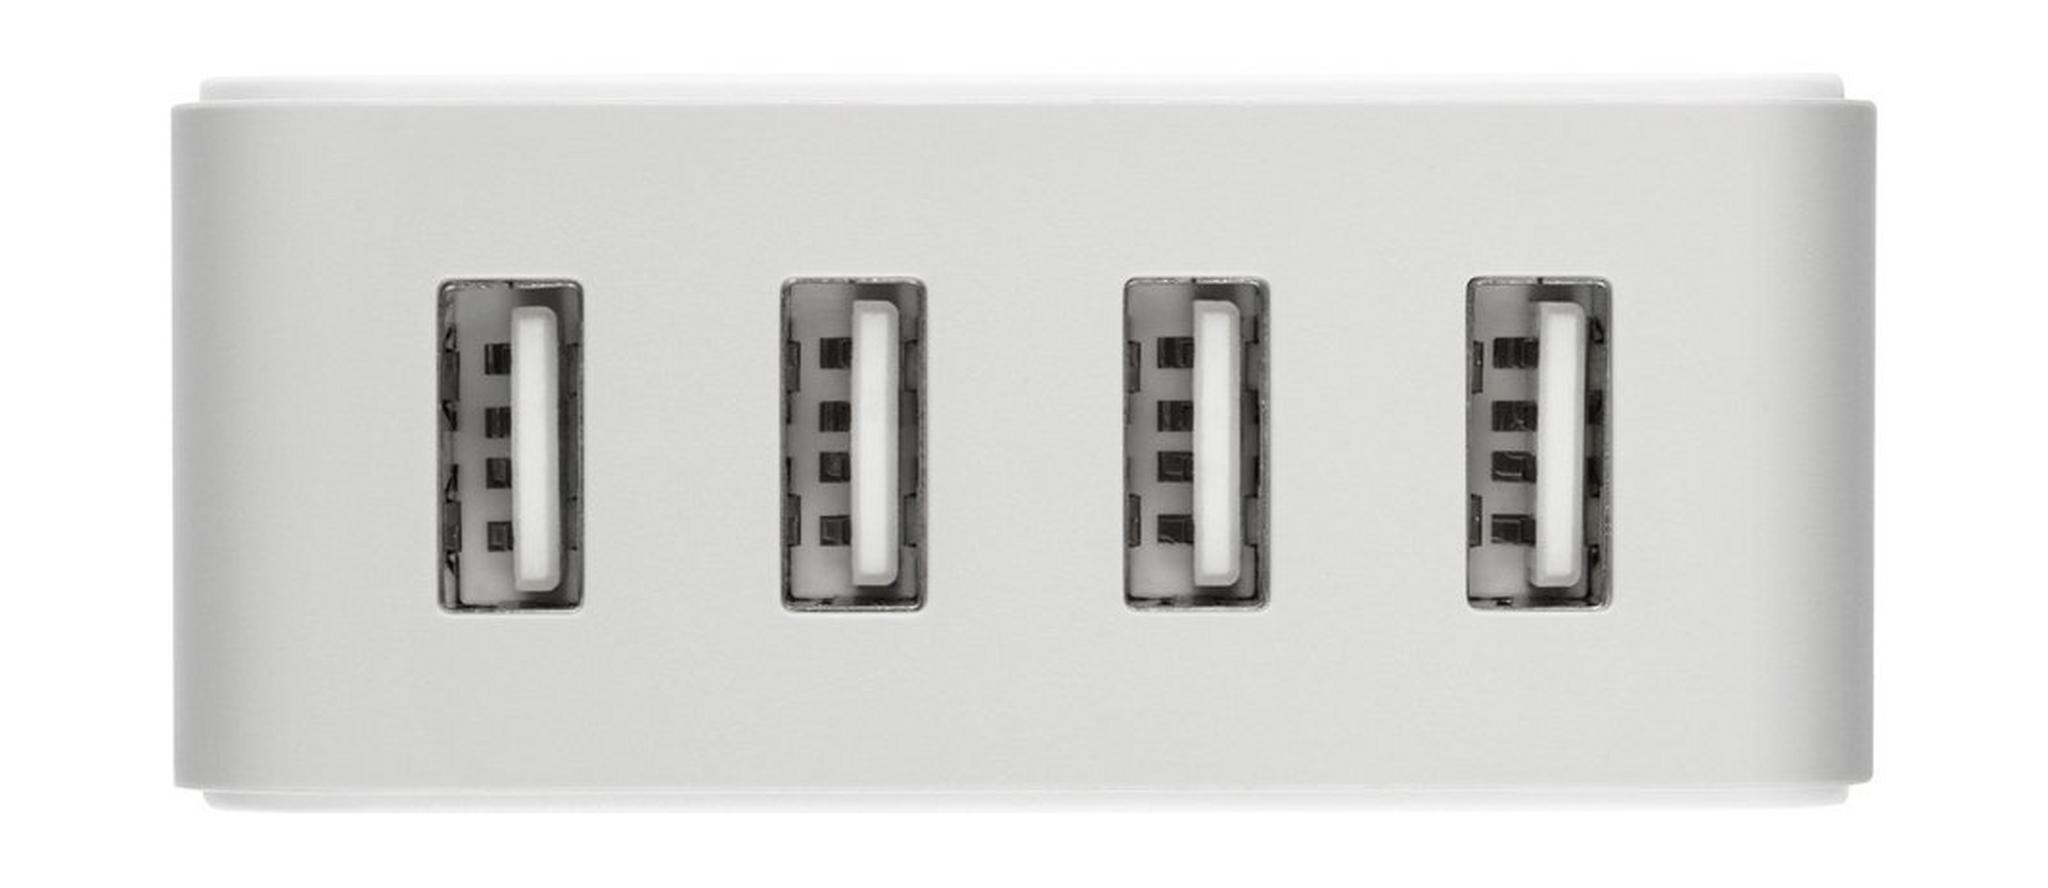 Moshi ProGeo 35 W 4-Port USB Wall Charger EU Version - White